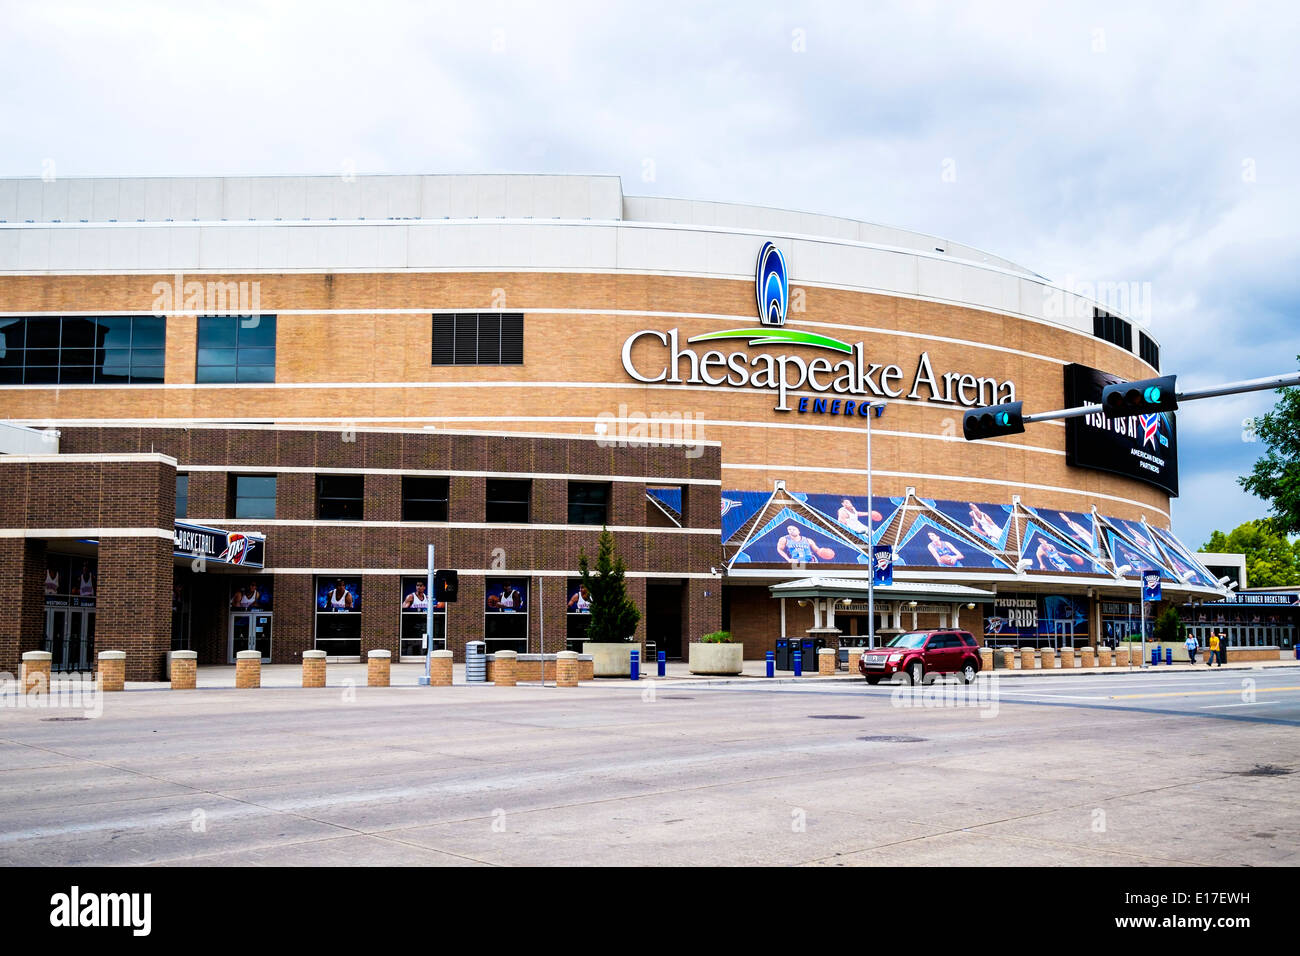 The Chesapeake Arena, also known as 'The Peake' exterior, home of Thunder basketball in downtown Oklahoma City, Oklahoma, USA. Stock Photo